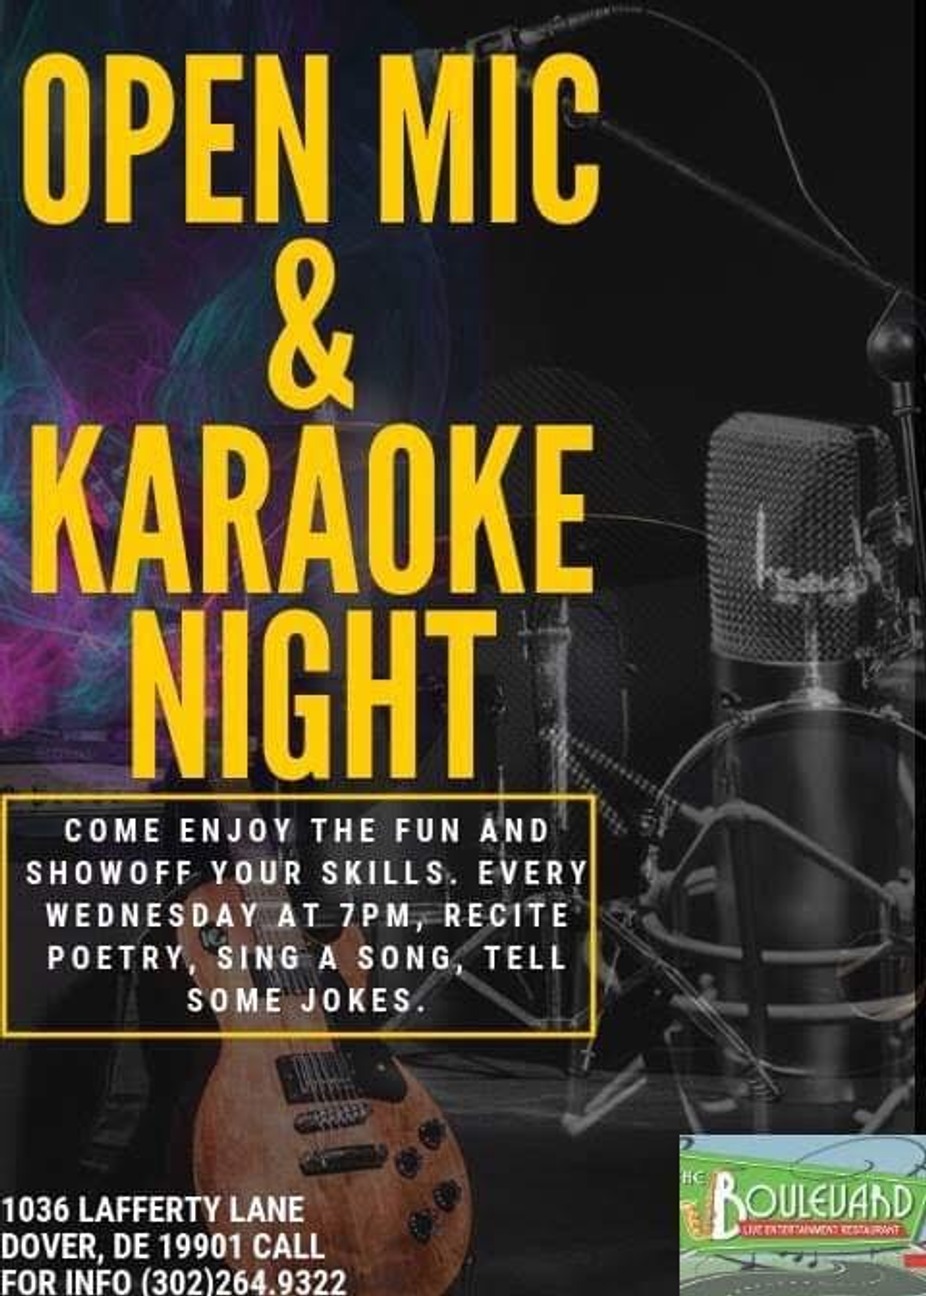 $1 Wing Karaoke Night Every Wednesday event photo